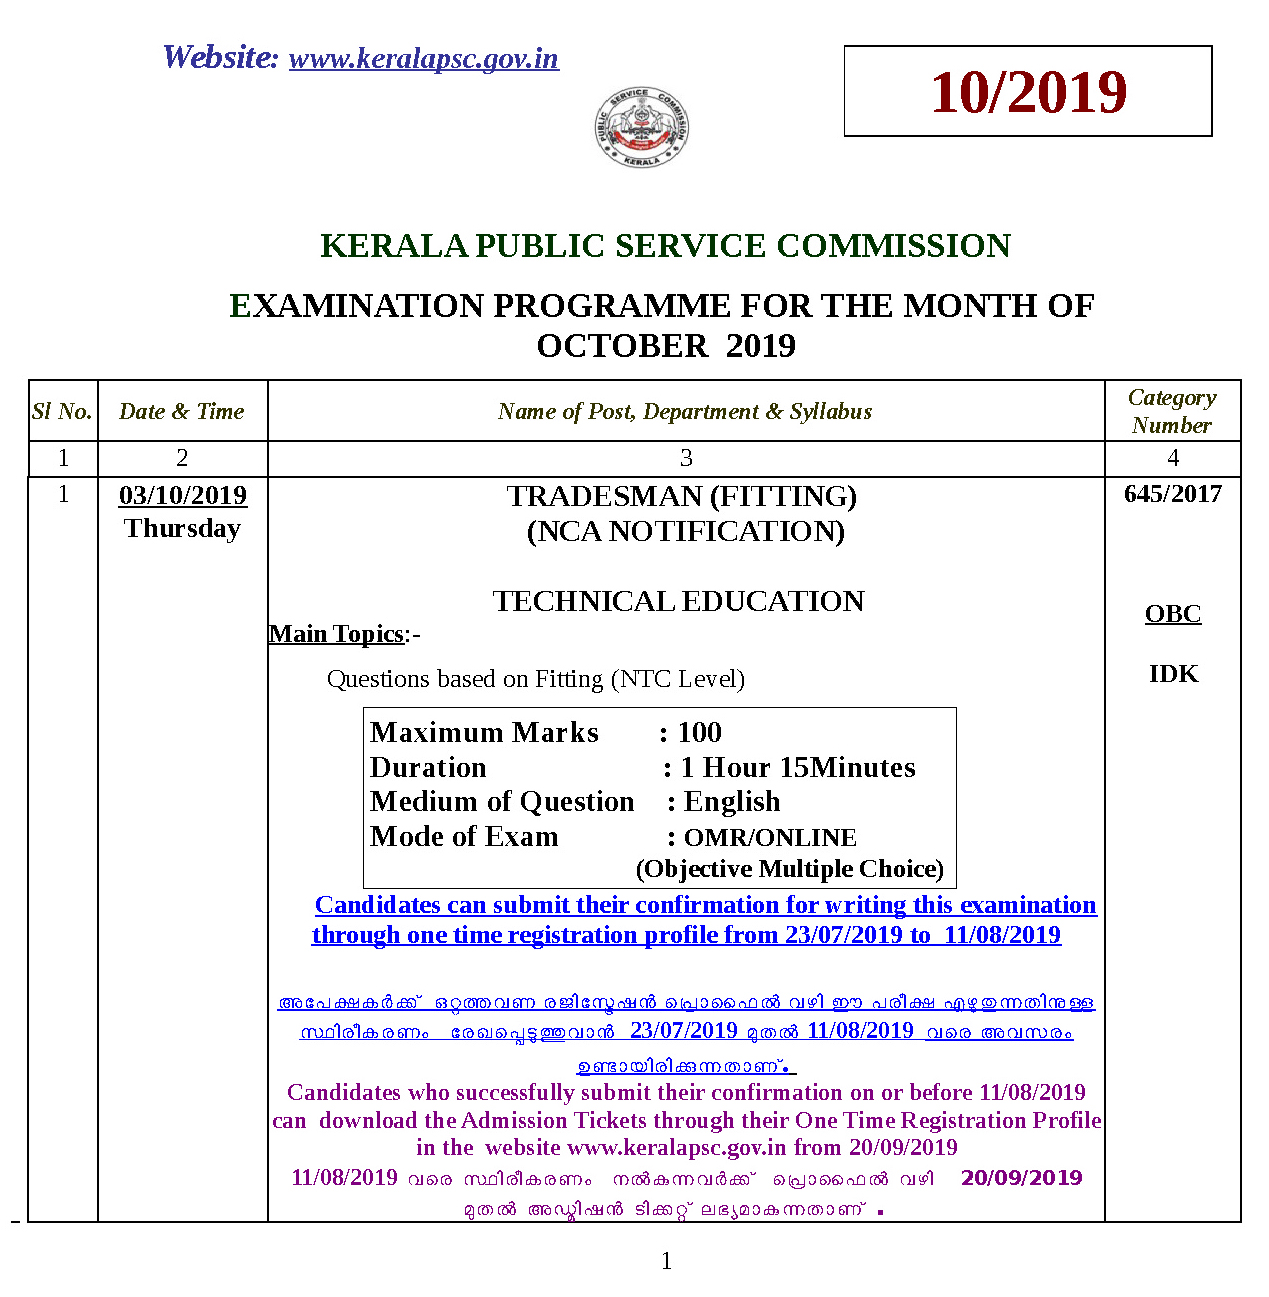 KPSC Examination Programme October 2019 - Notification Image 1